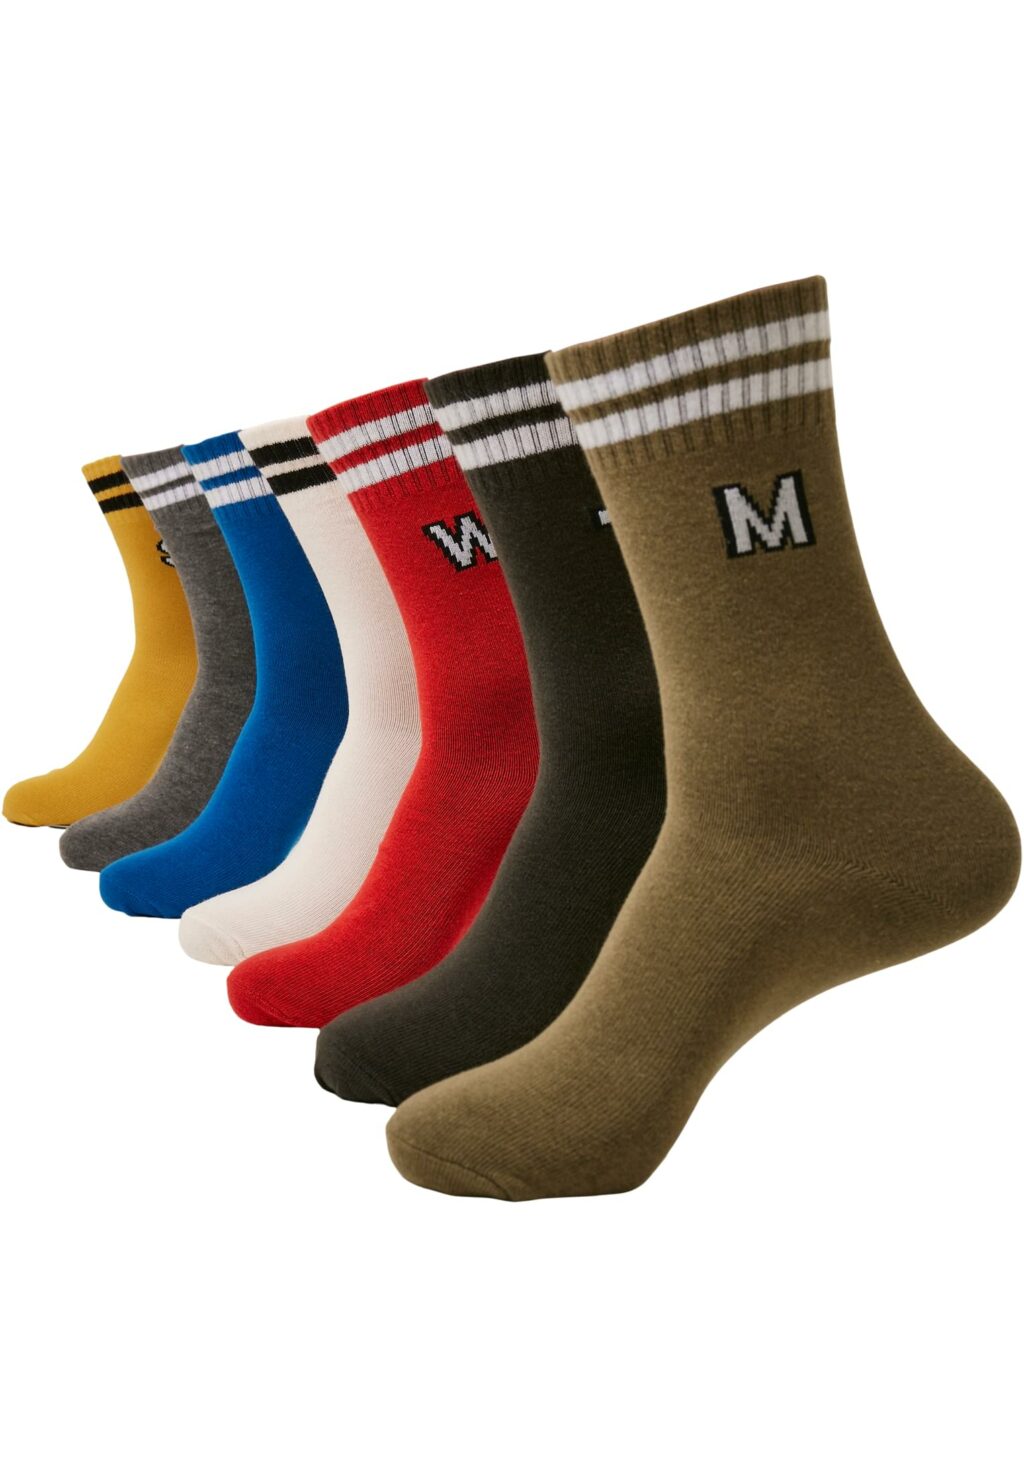 College Letter Socks 7-Pack wintercolors TB3741